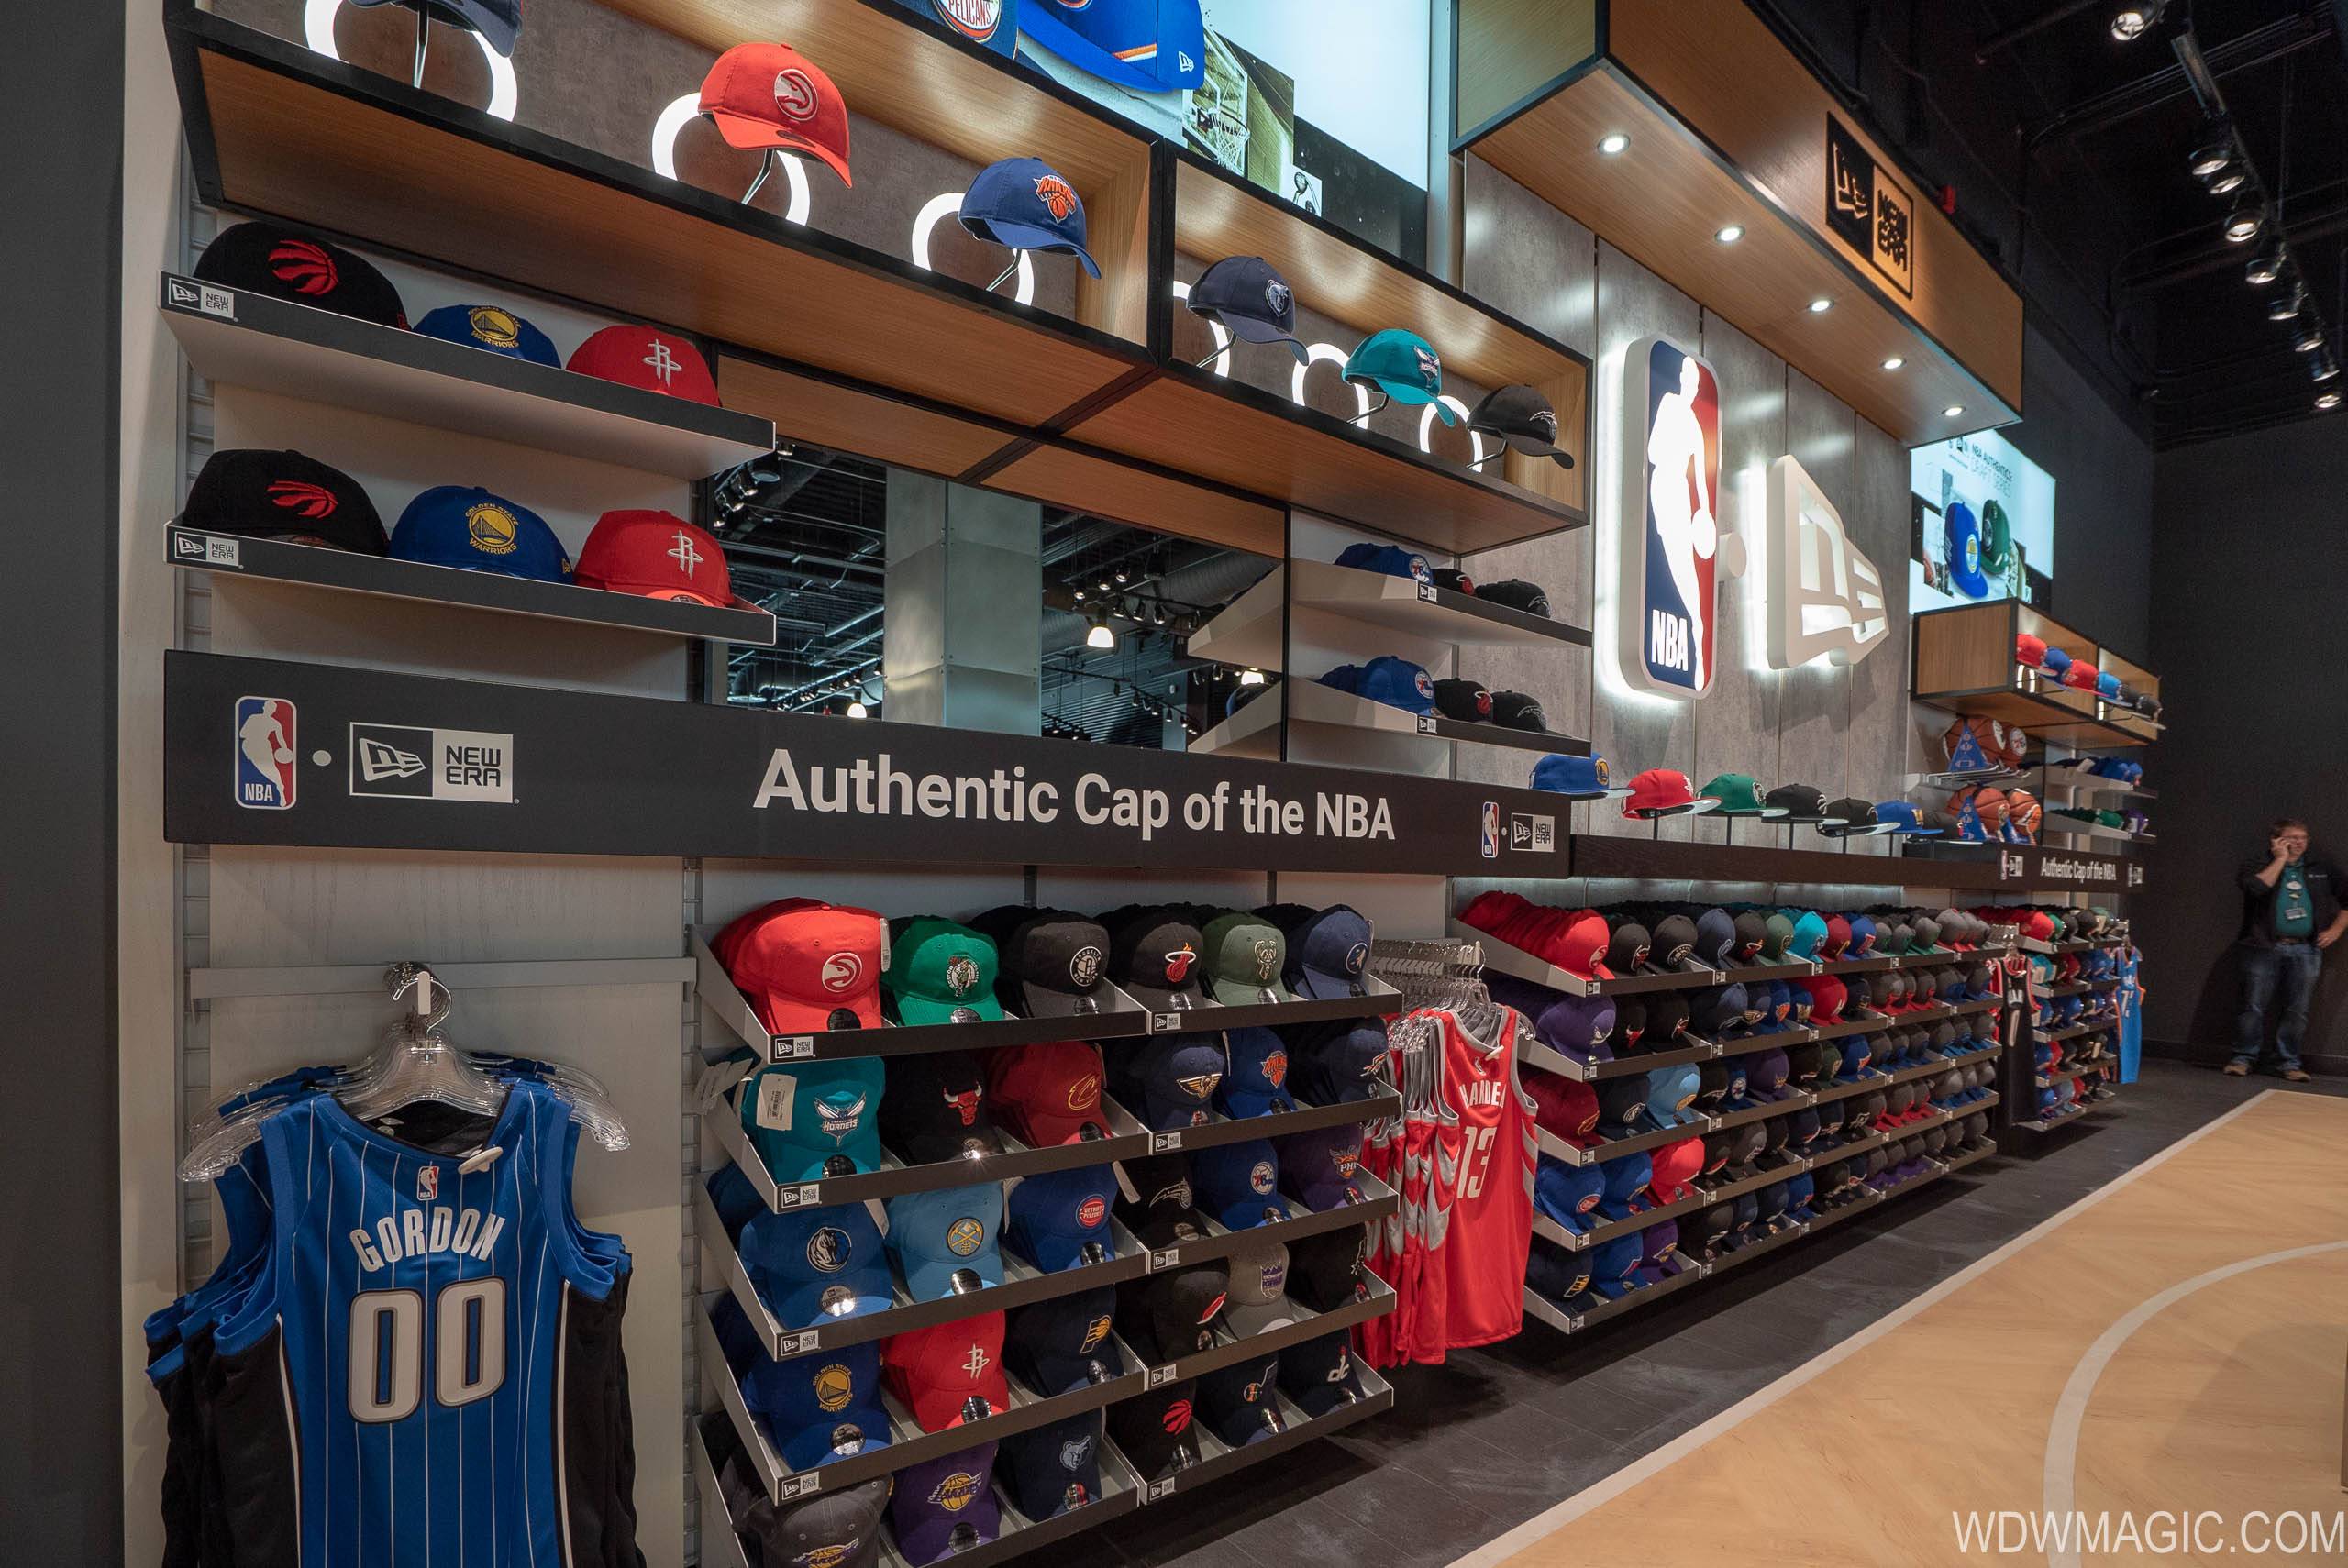 Disney Springs: NBA Store opens ahead of NBA Experience – Orlando Sentinel